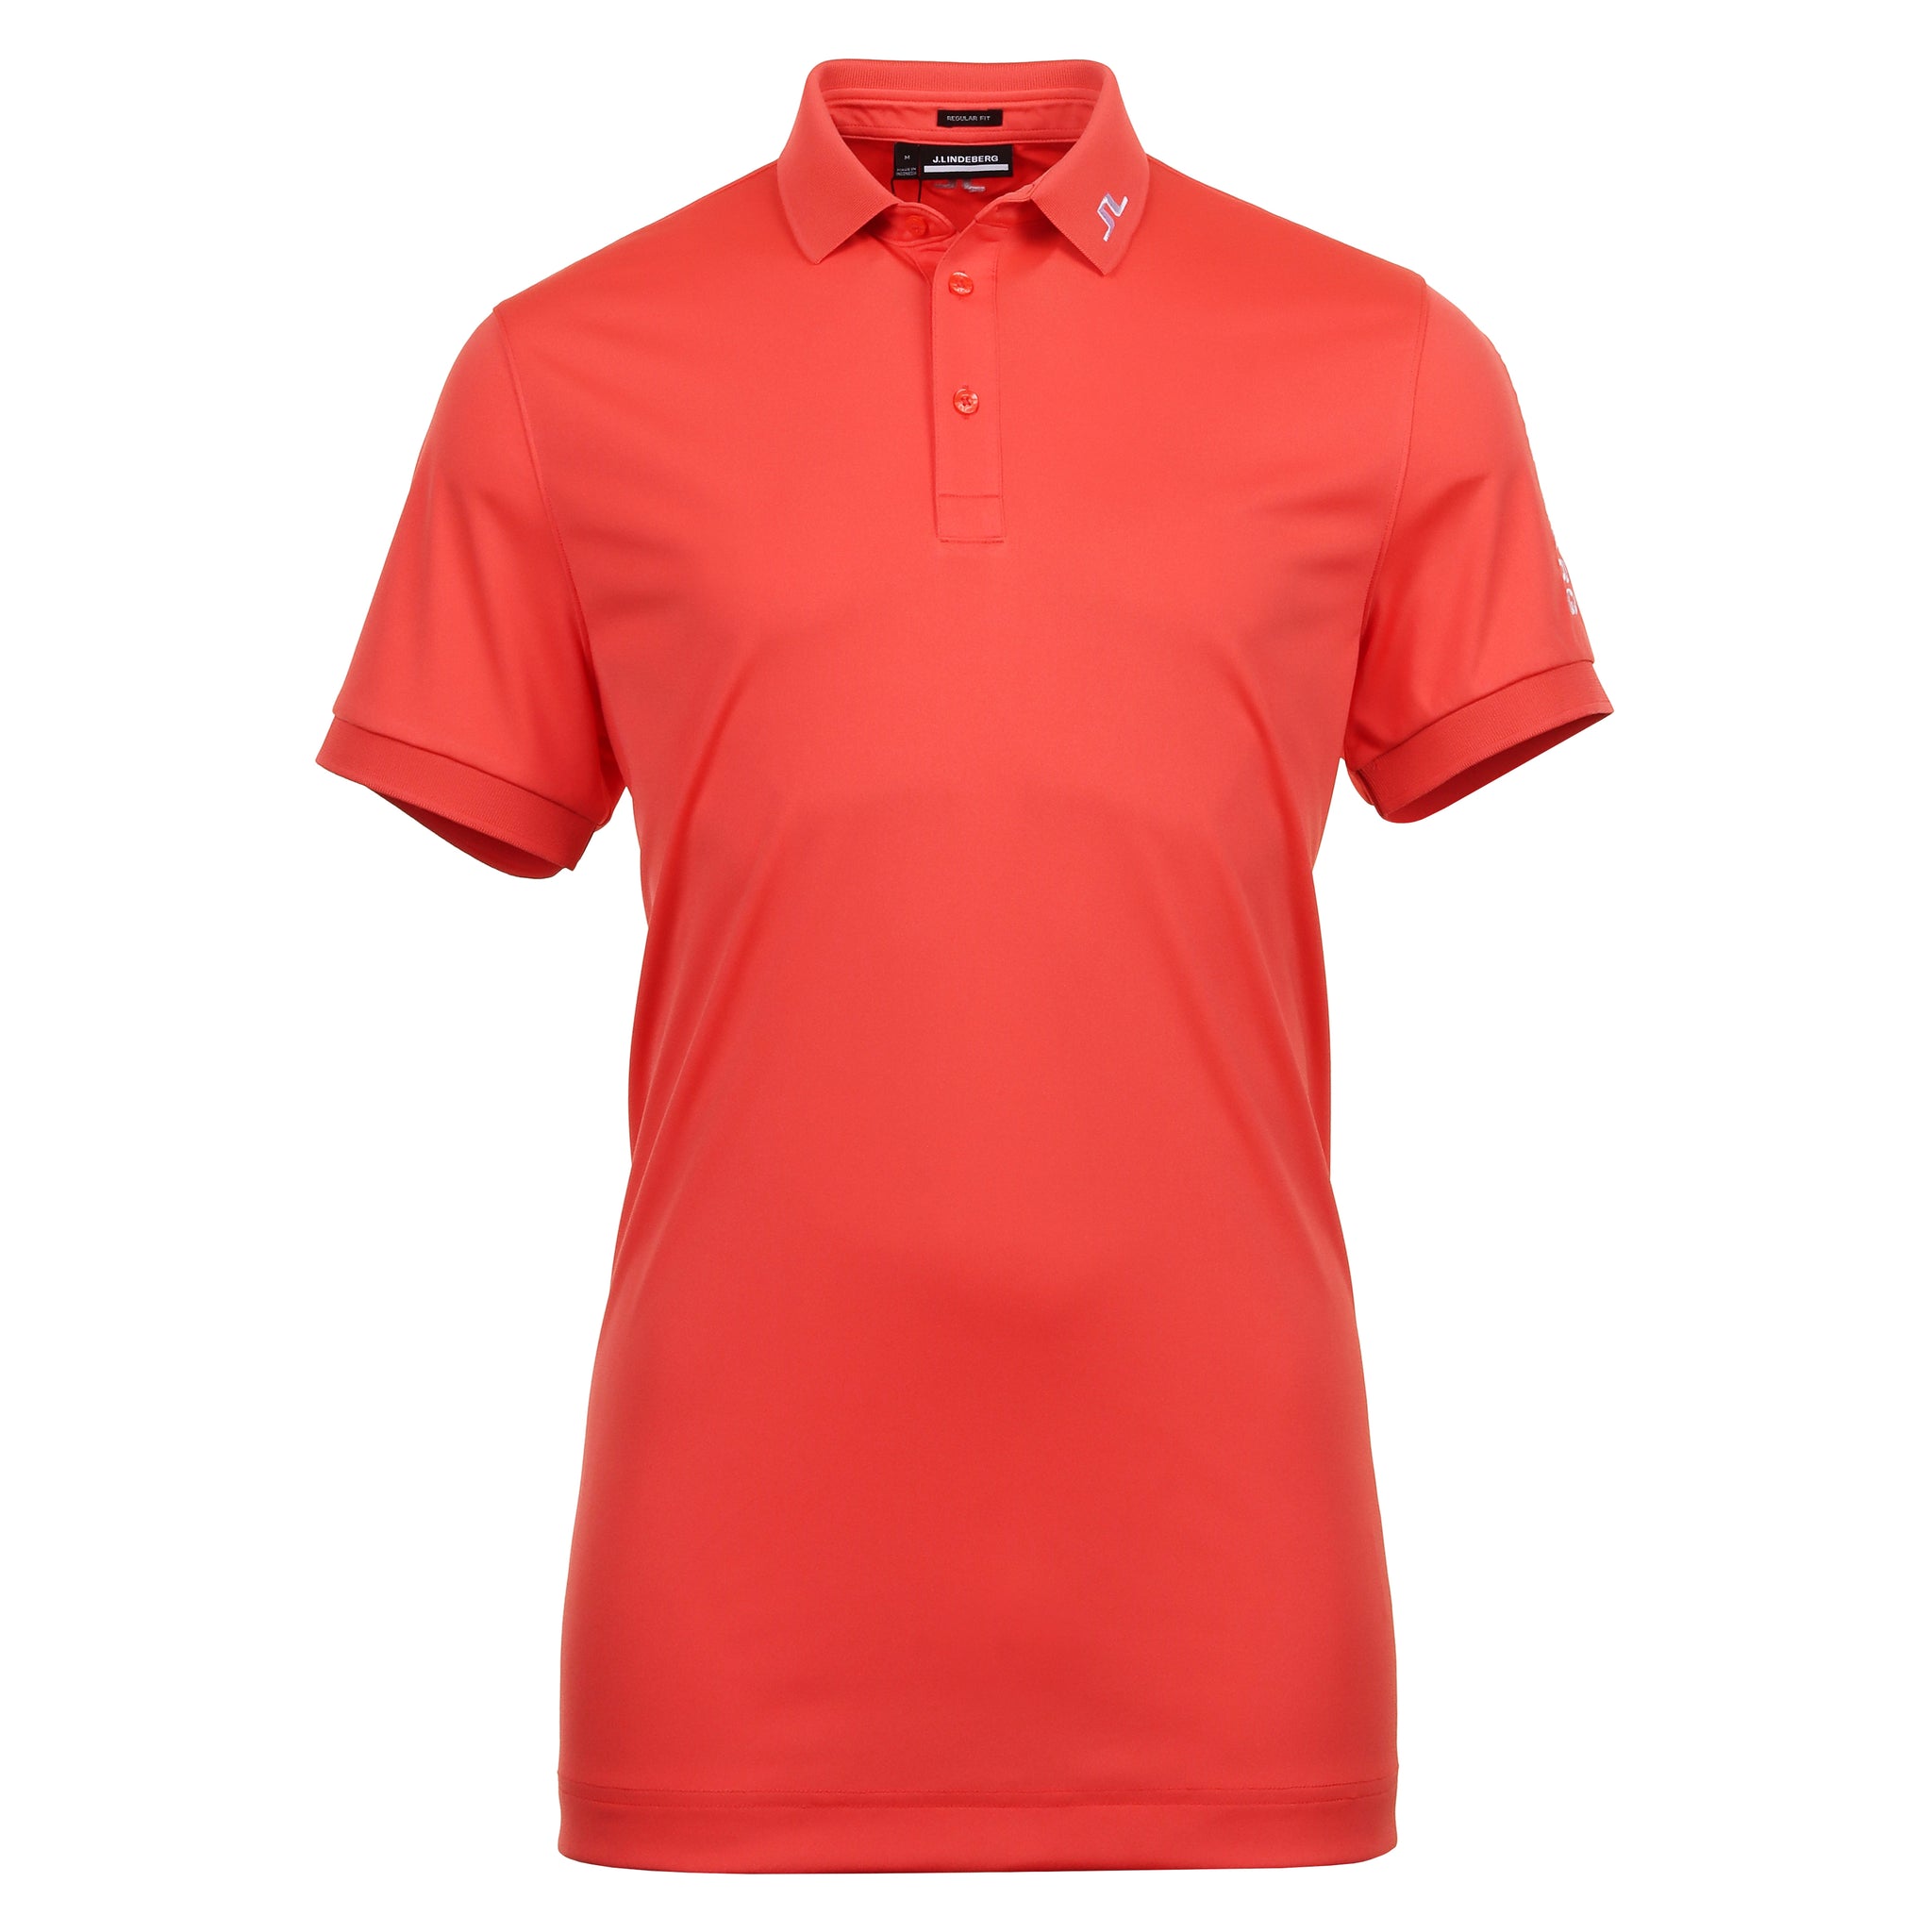 J.Lindeberg Golf Tour Tech Polo Shirt GMJT11232 Hot Coral G050 | Function18